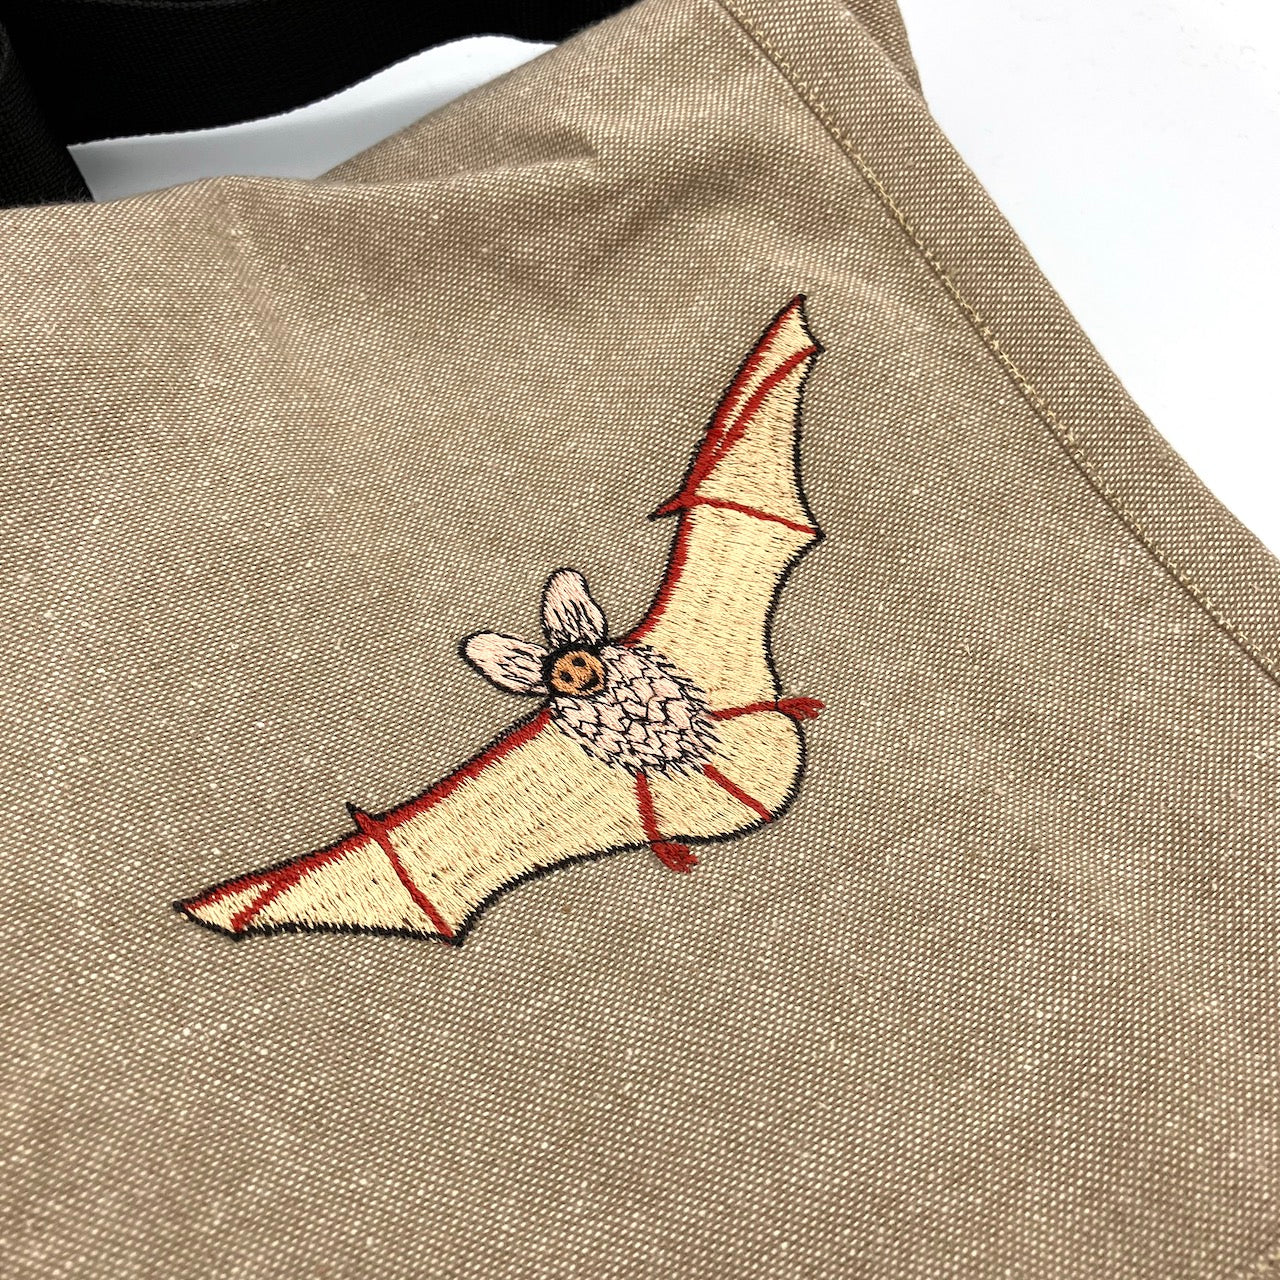 Spotted Bat Field Bag